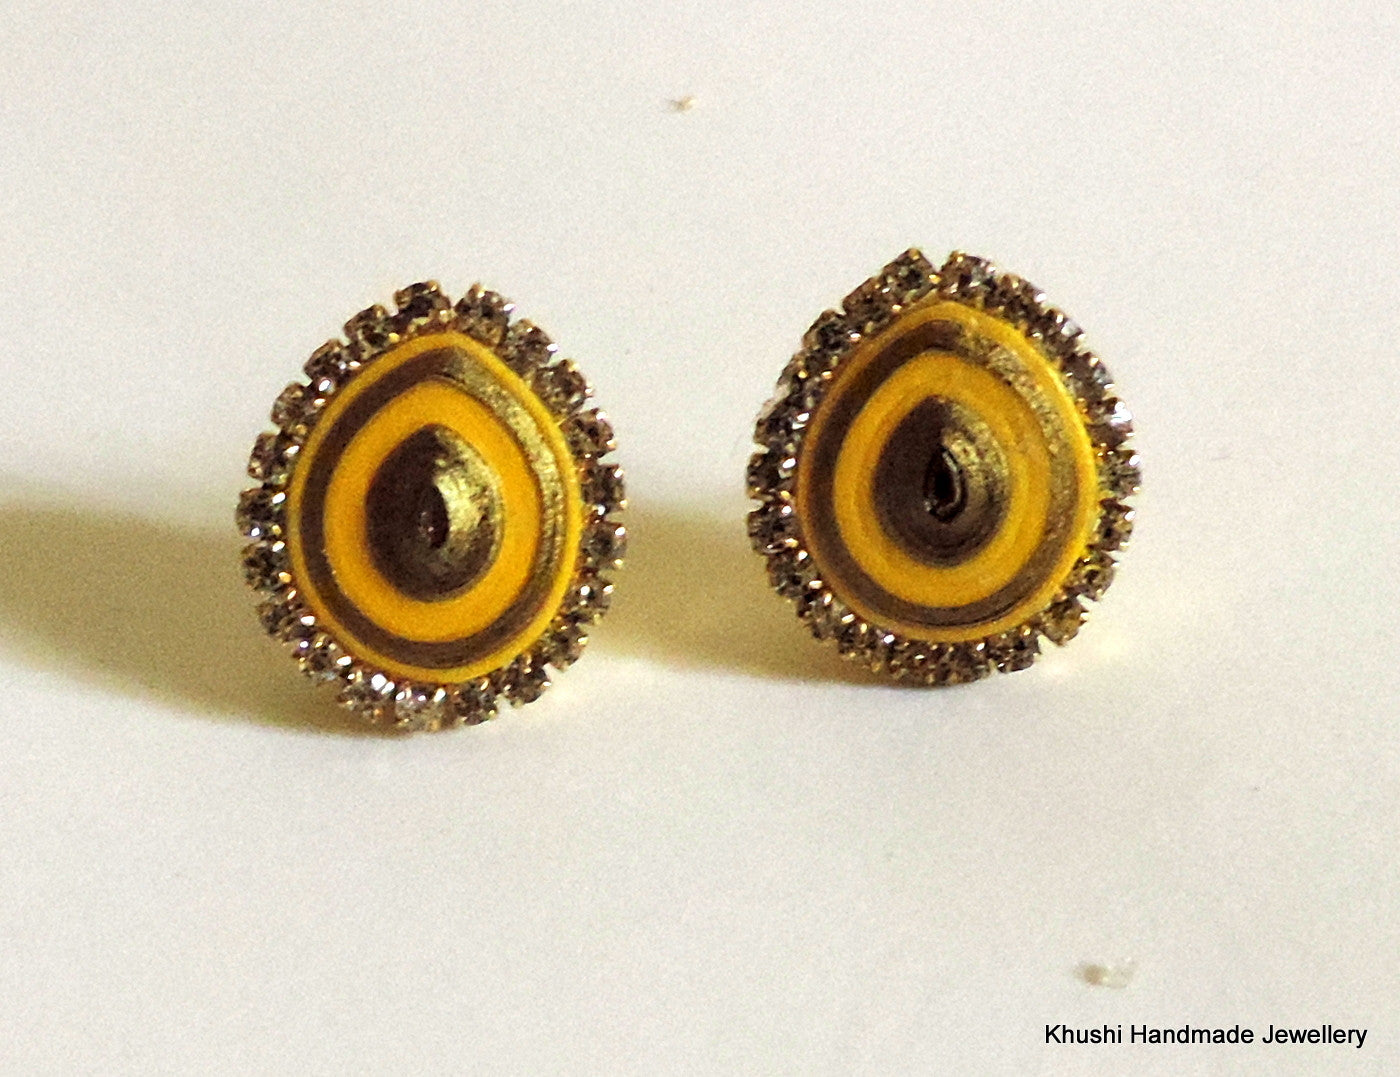 Yellow studs with stone lining - Khushi Handmade Jewellery